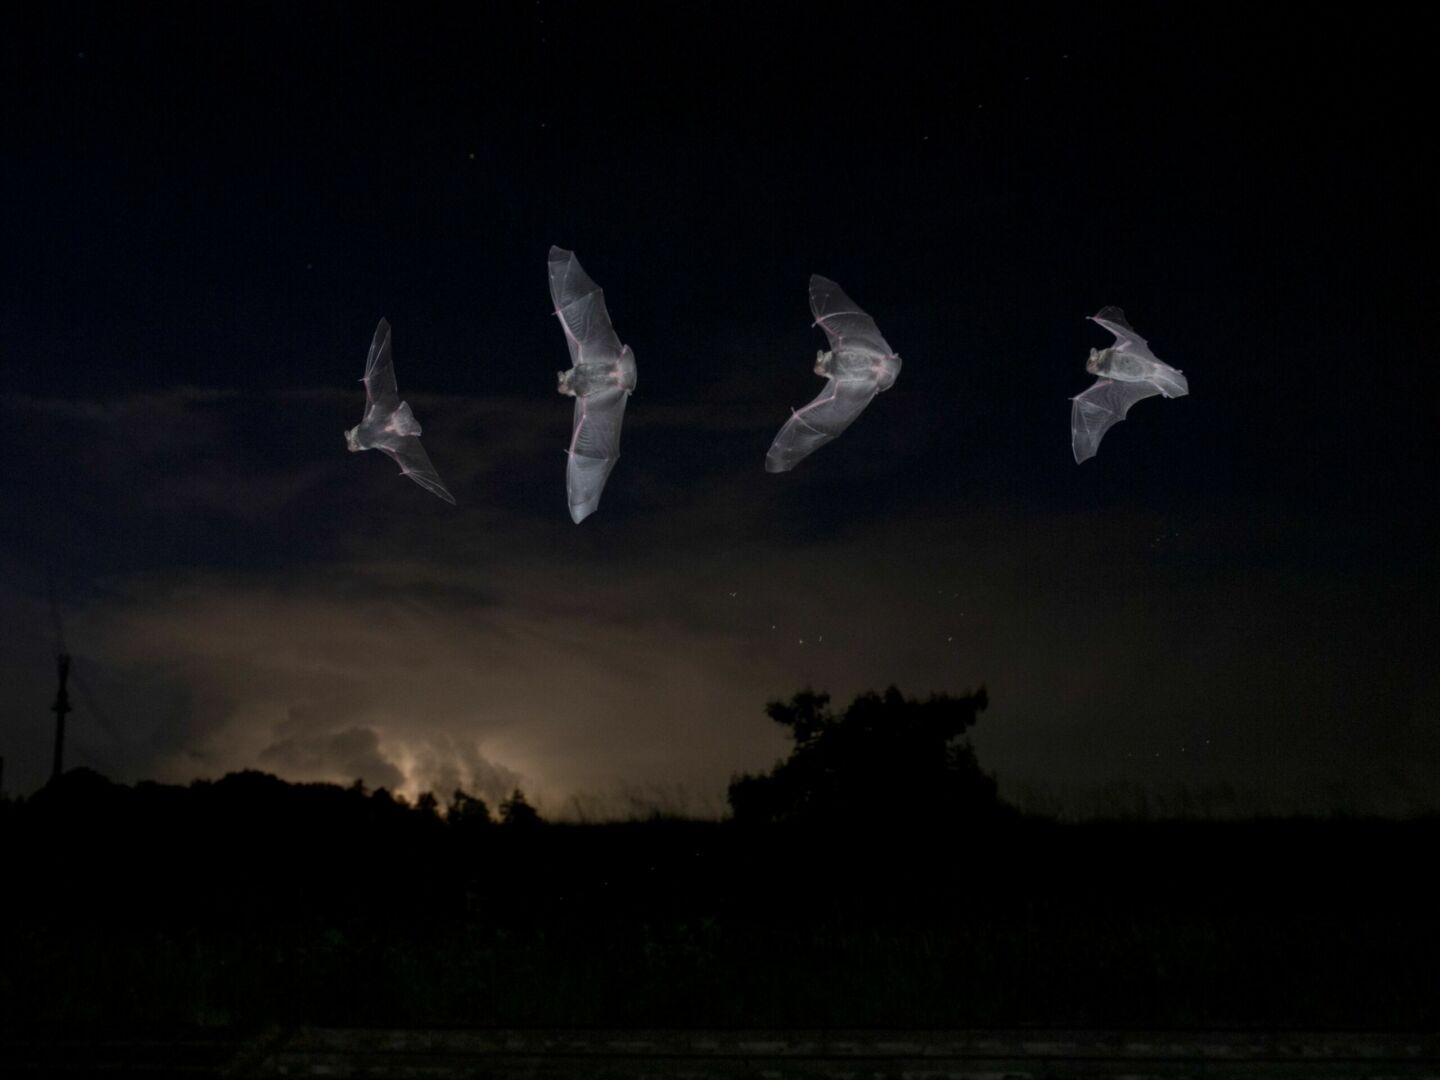 Bat flying across the sky at night.